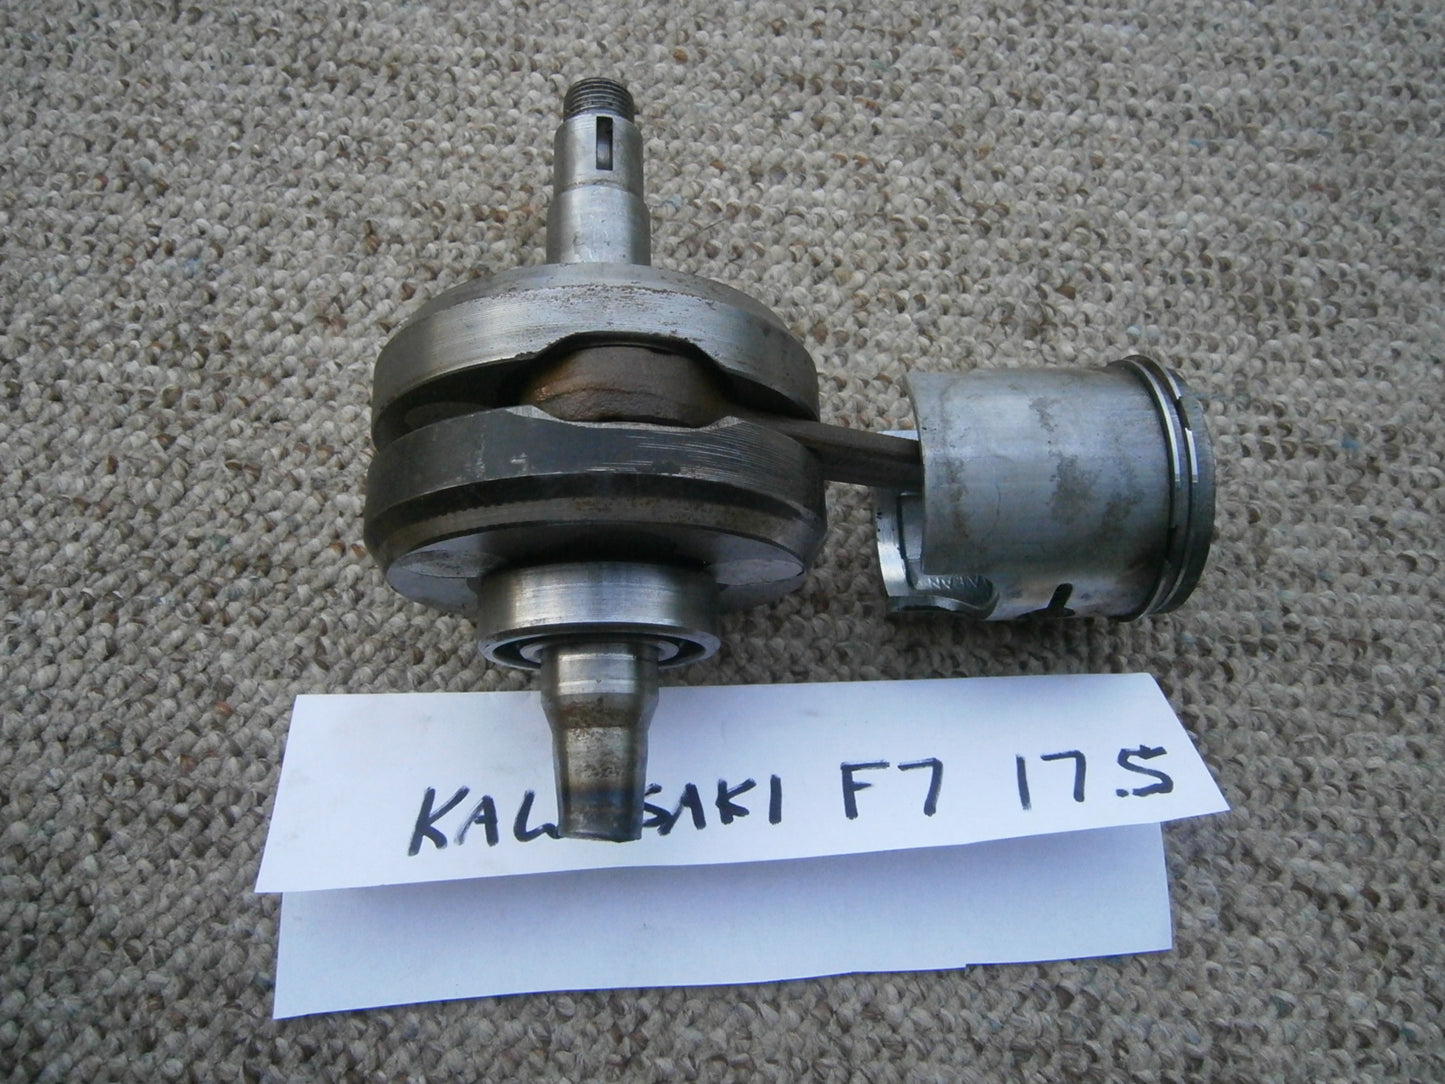 Kawasaki F7 175 cc piston, connecting rod, and crankshaft  main bearing 4400